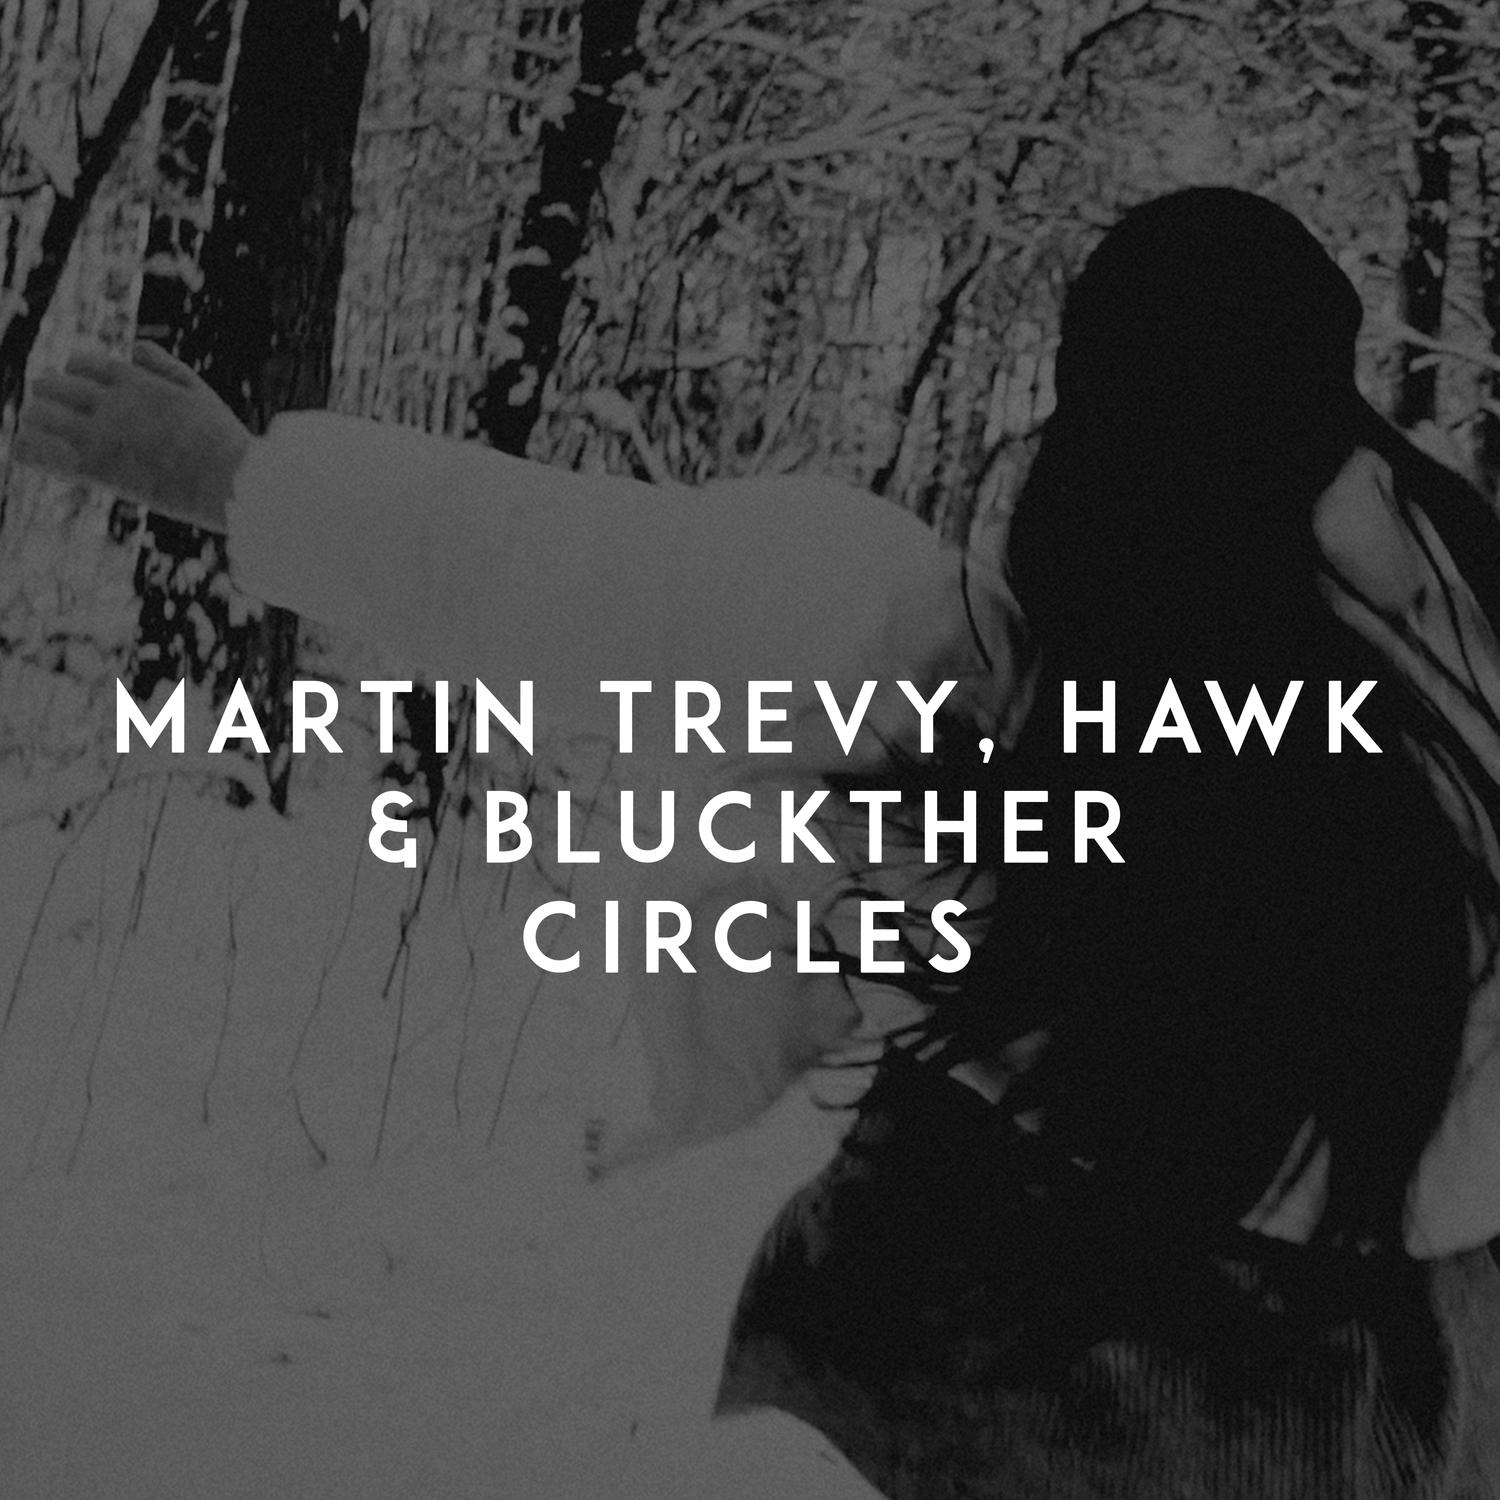 Martin Trevy - Circles